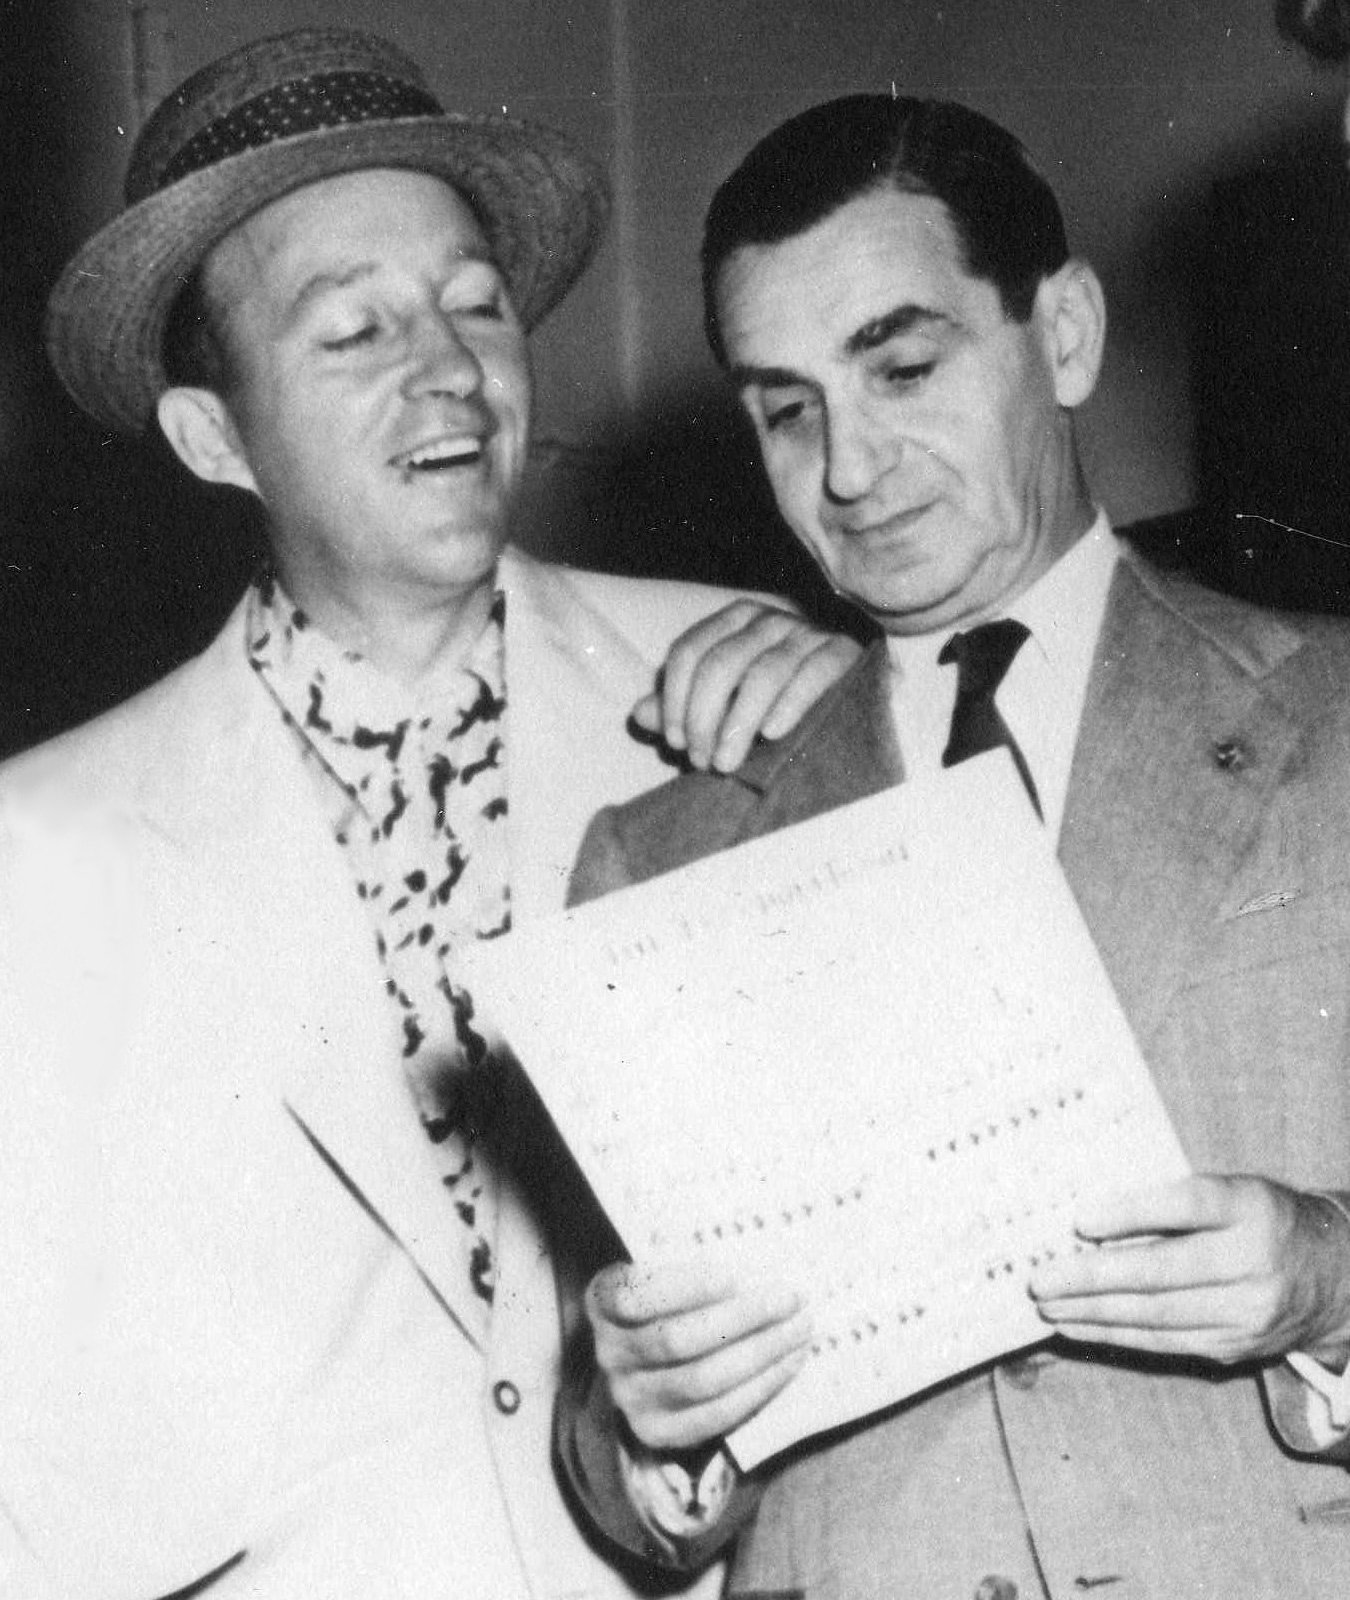 Irving Berlin with Bing Crosby, 1947